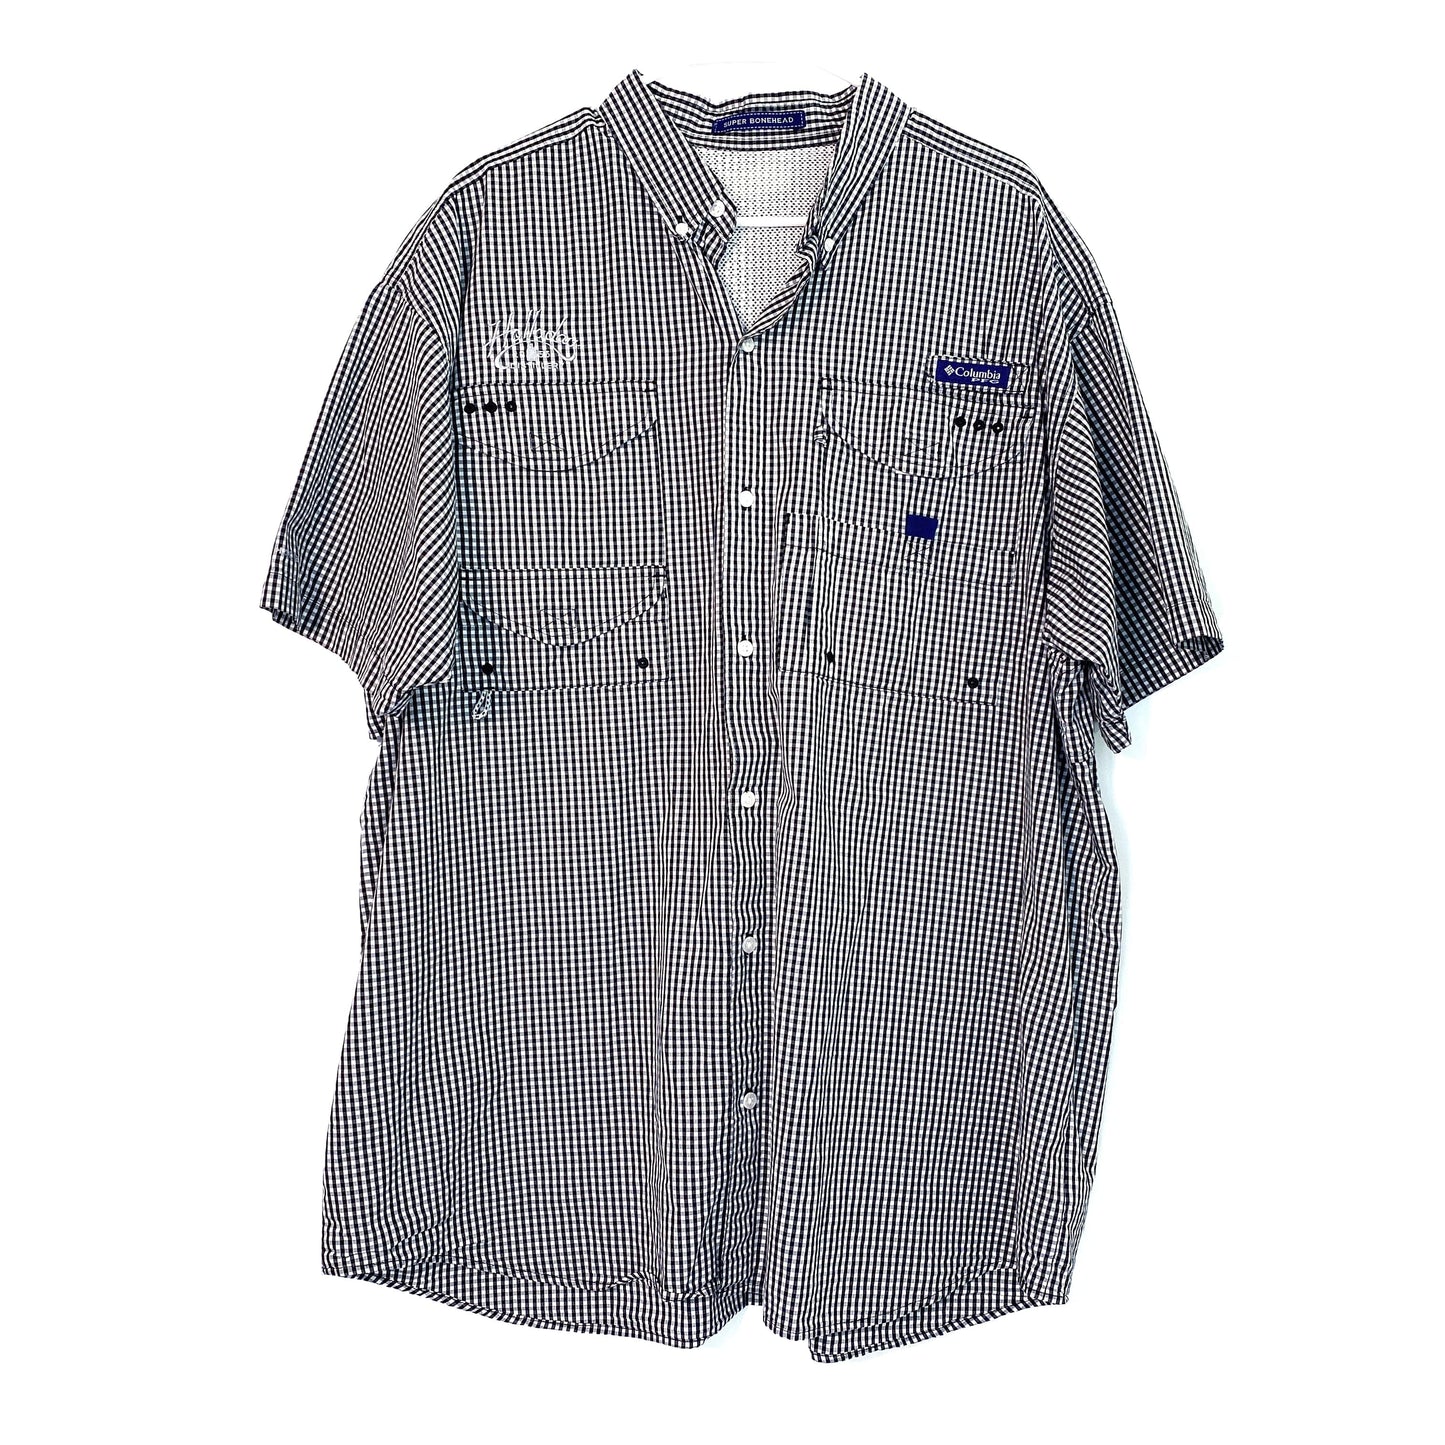 Columbia PFG Mens Size 2XL Black White Check Plaid Super Bonehead Vented Fishing Shirt Button-Up S/s